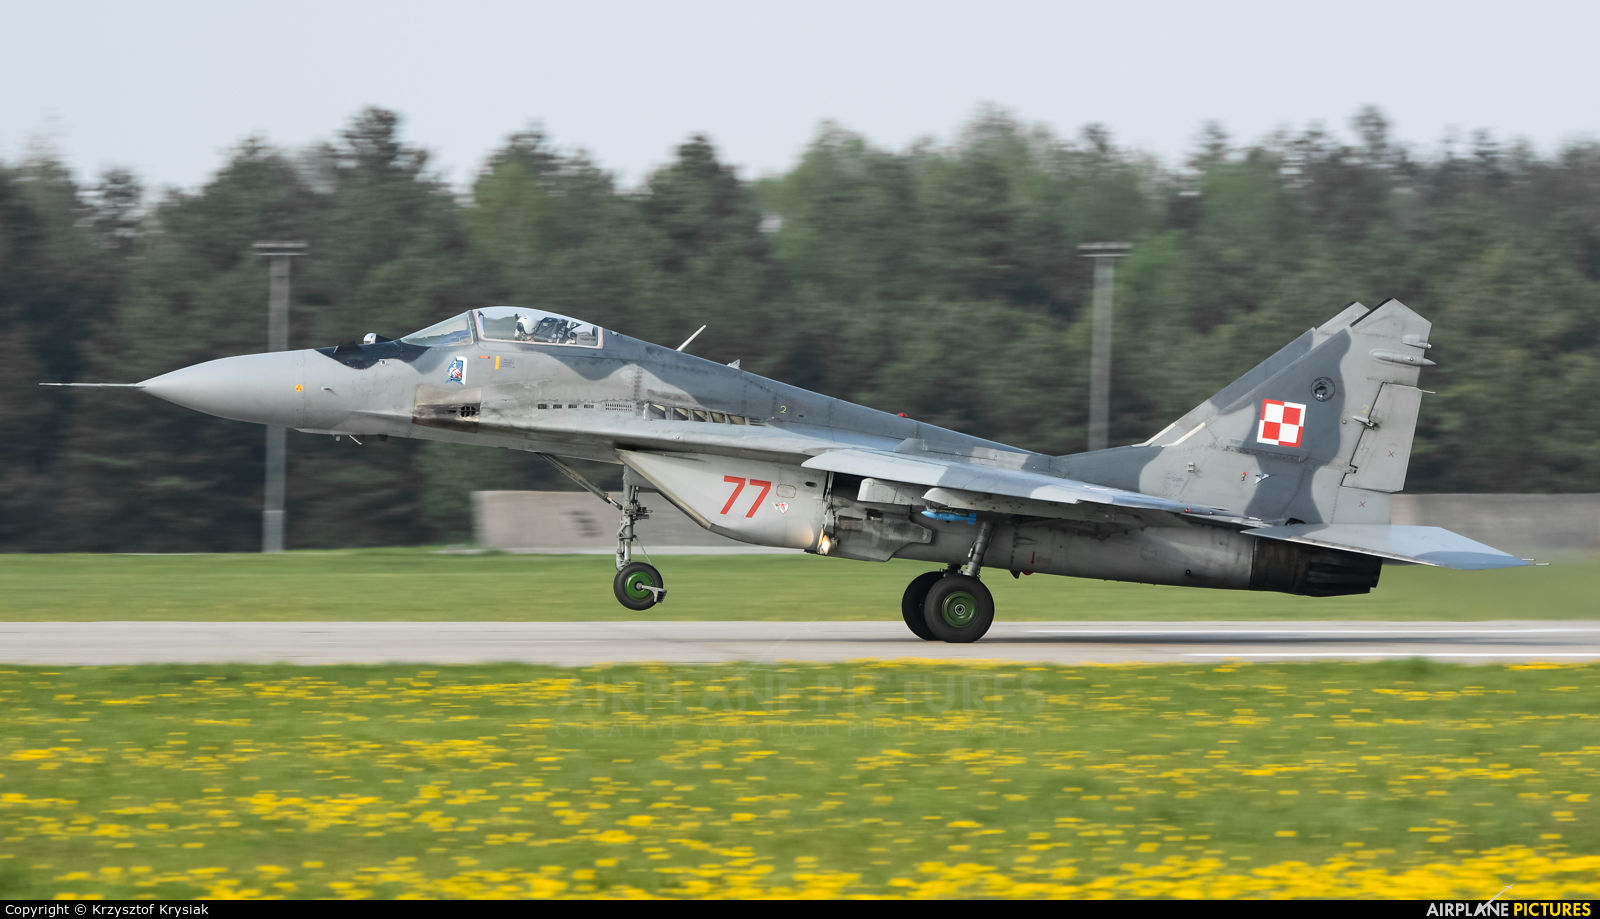 Poland - Air Force 77 aircraft at Świdwin